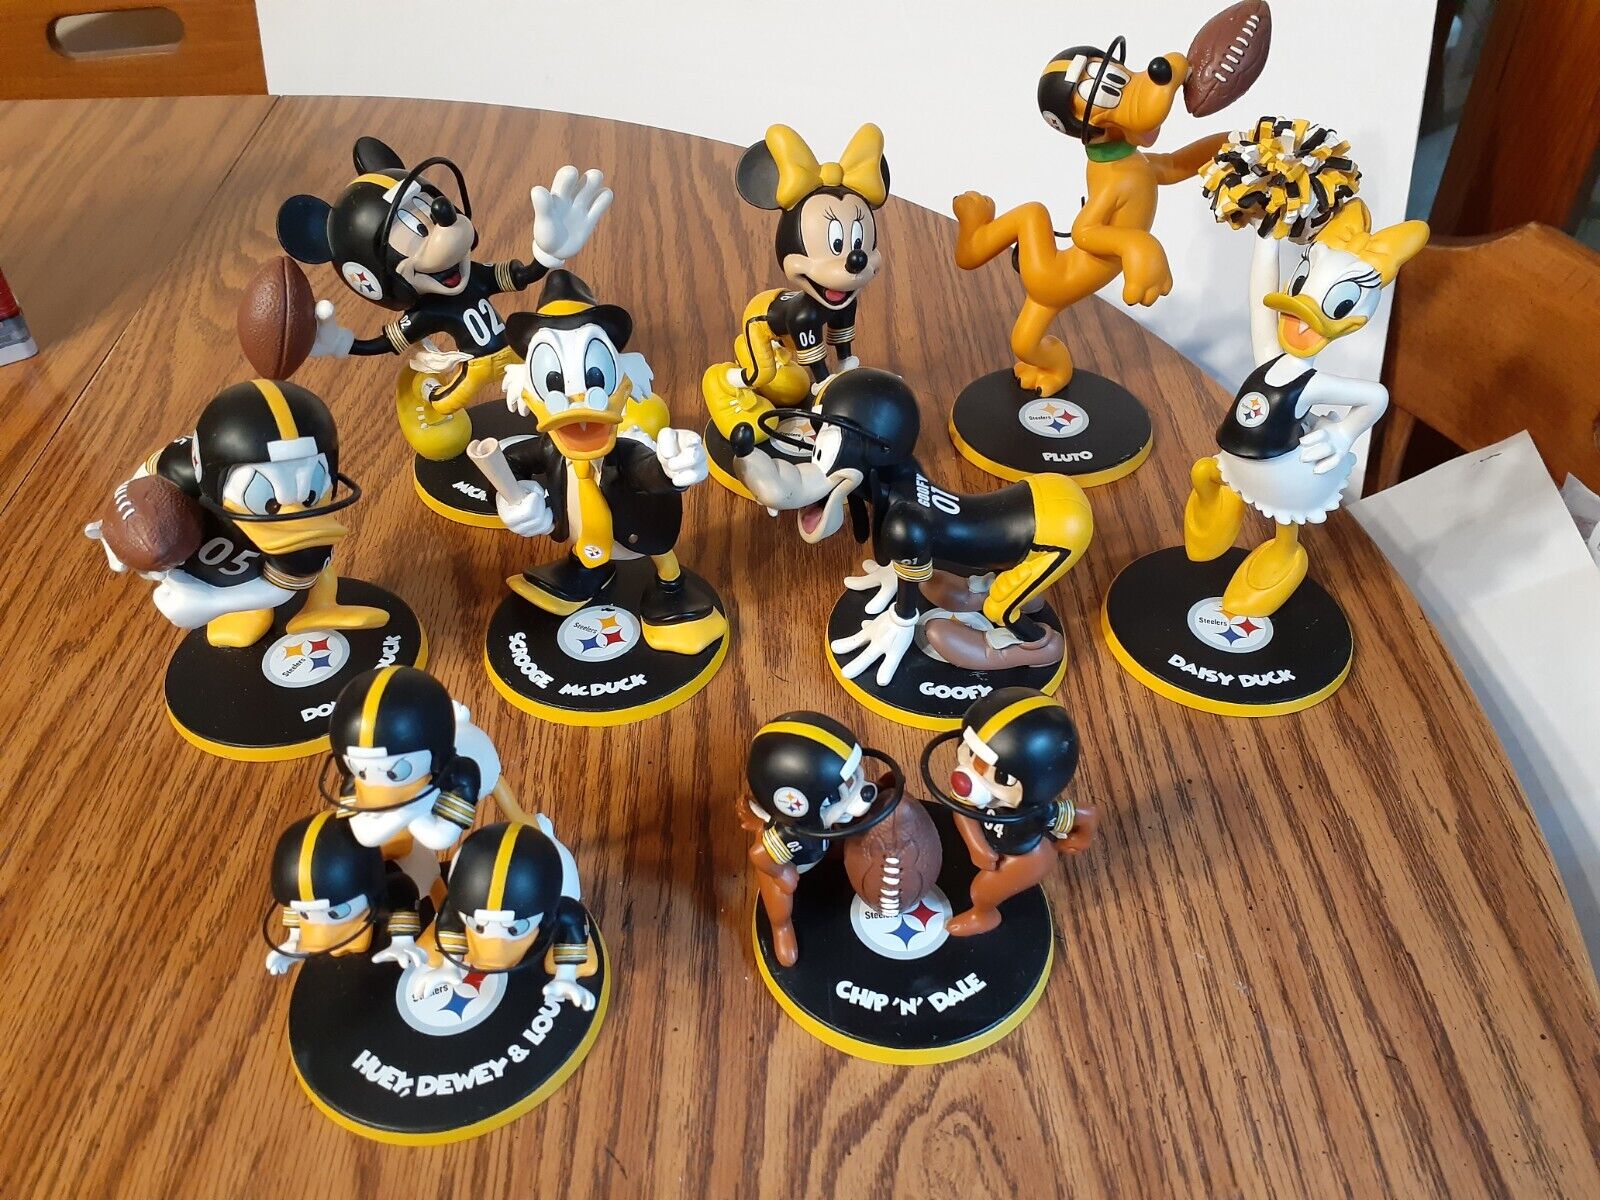 Disney Danbury Mint PITTSBURGH STEELERS NFL Disney Characters set of 9 figurines